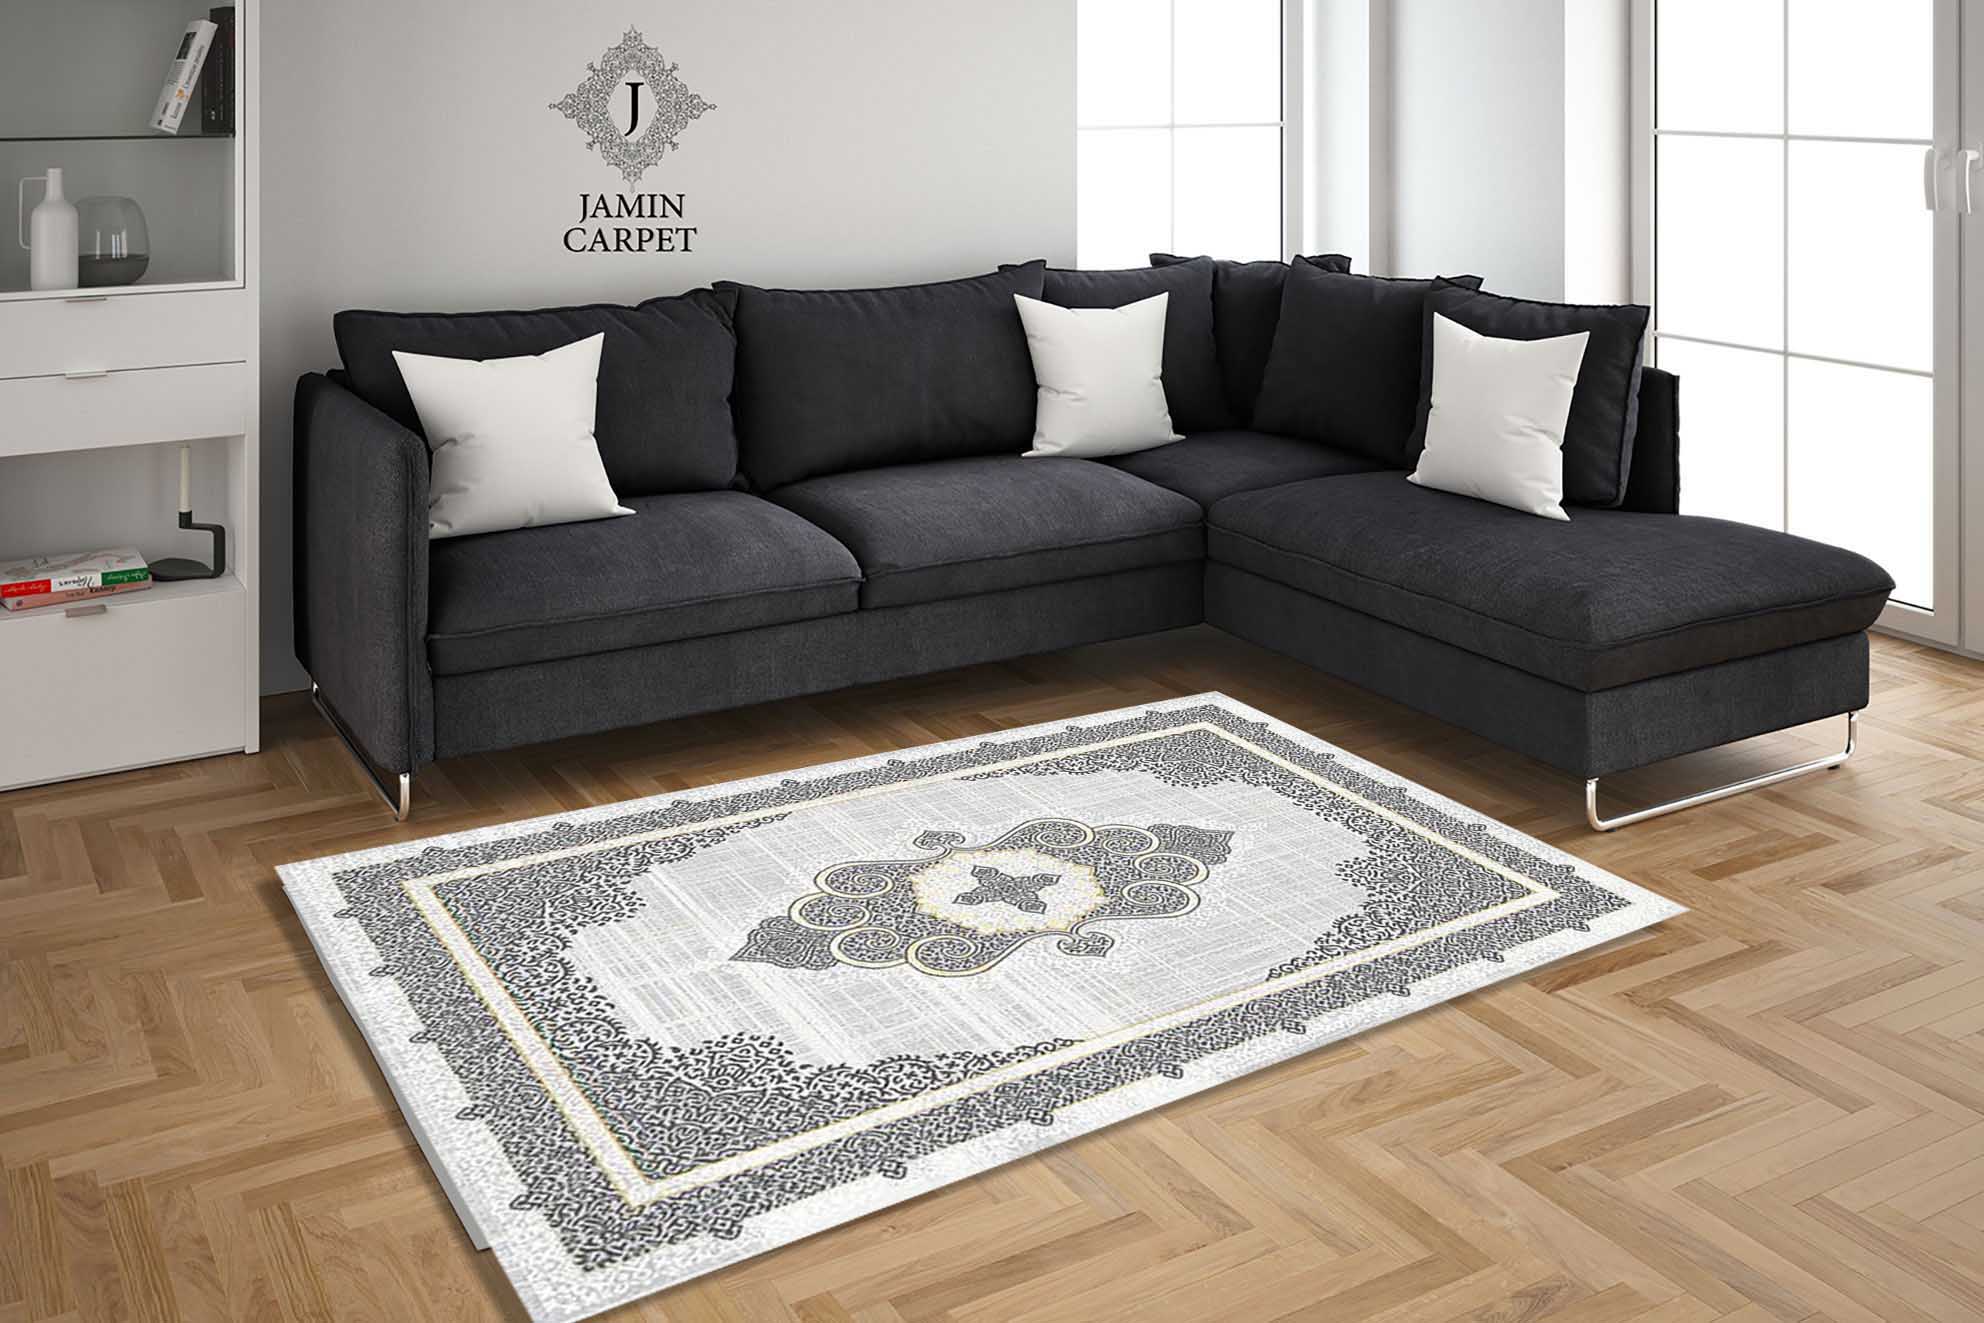 Fantasy carpet, code 276, comb 400, density 1800, all acrylic